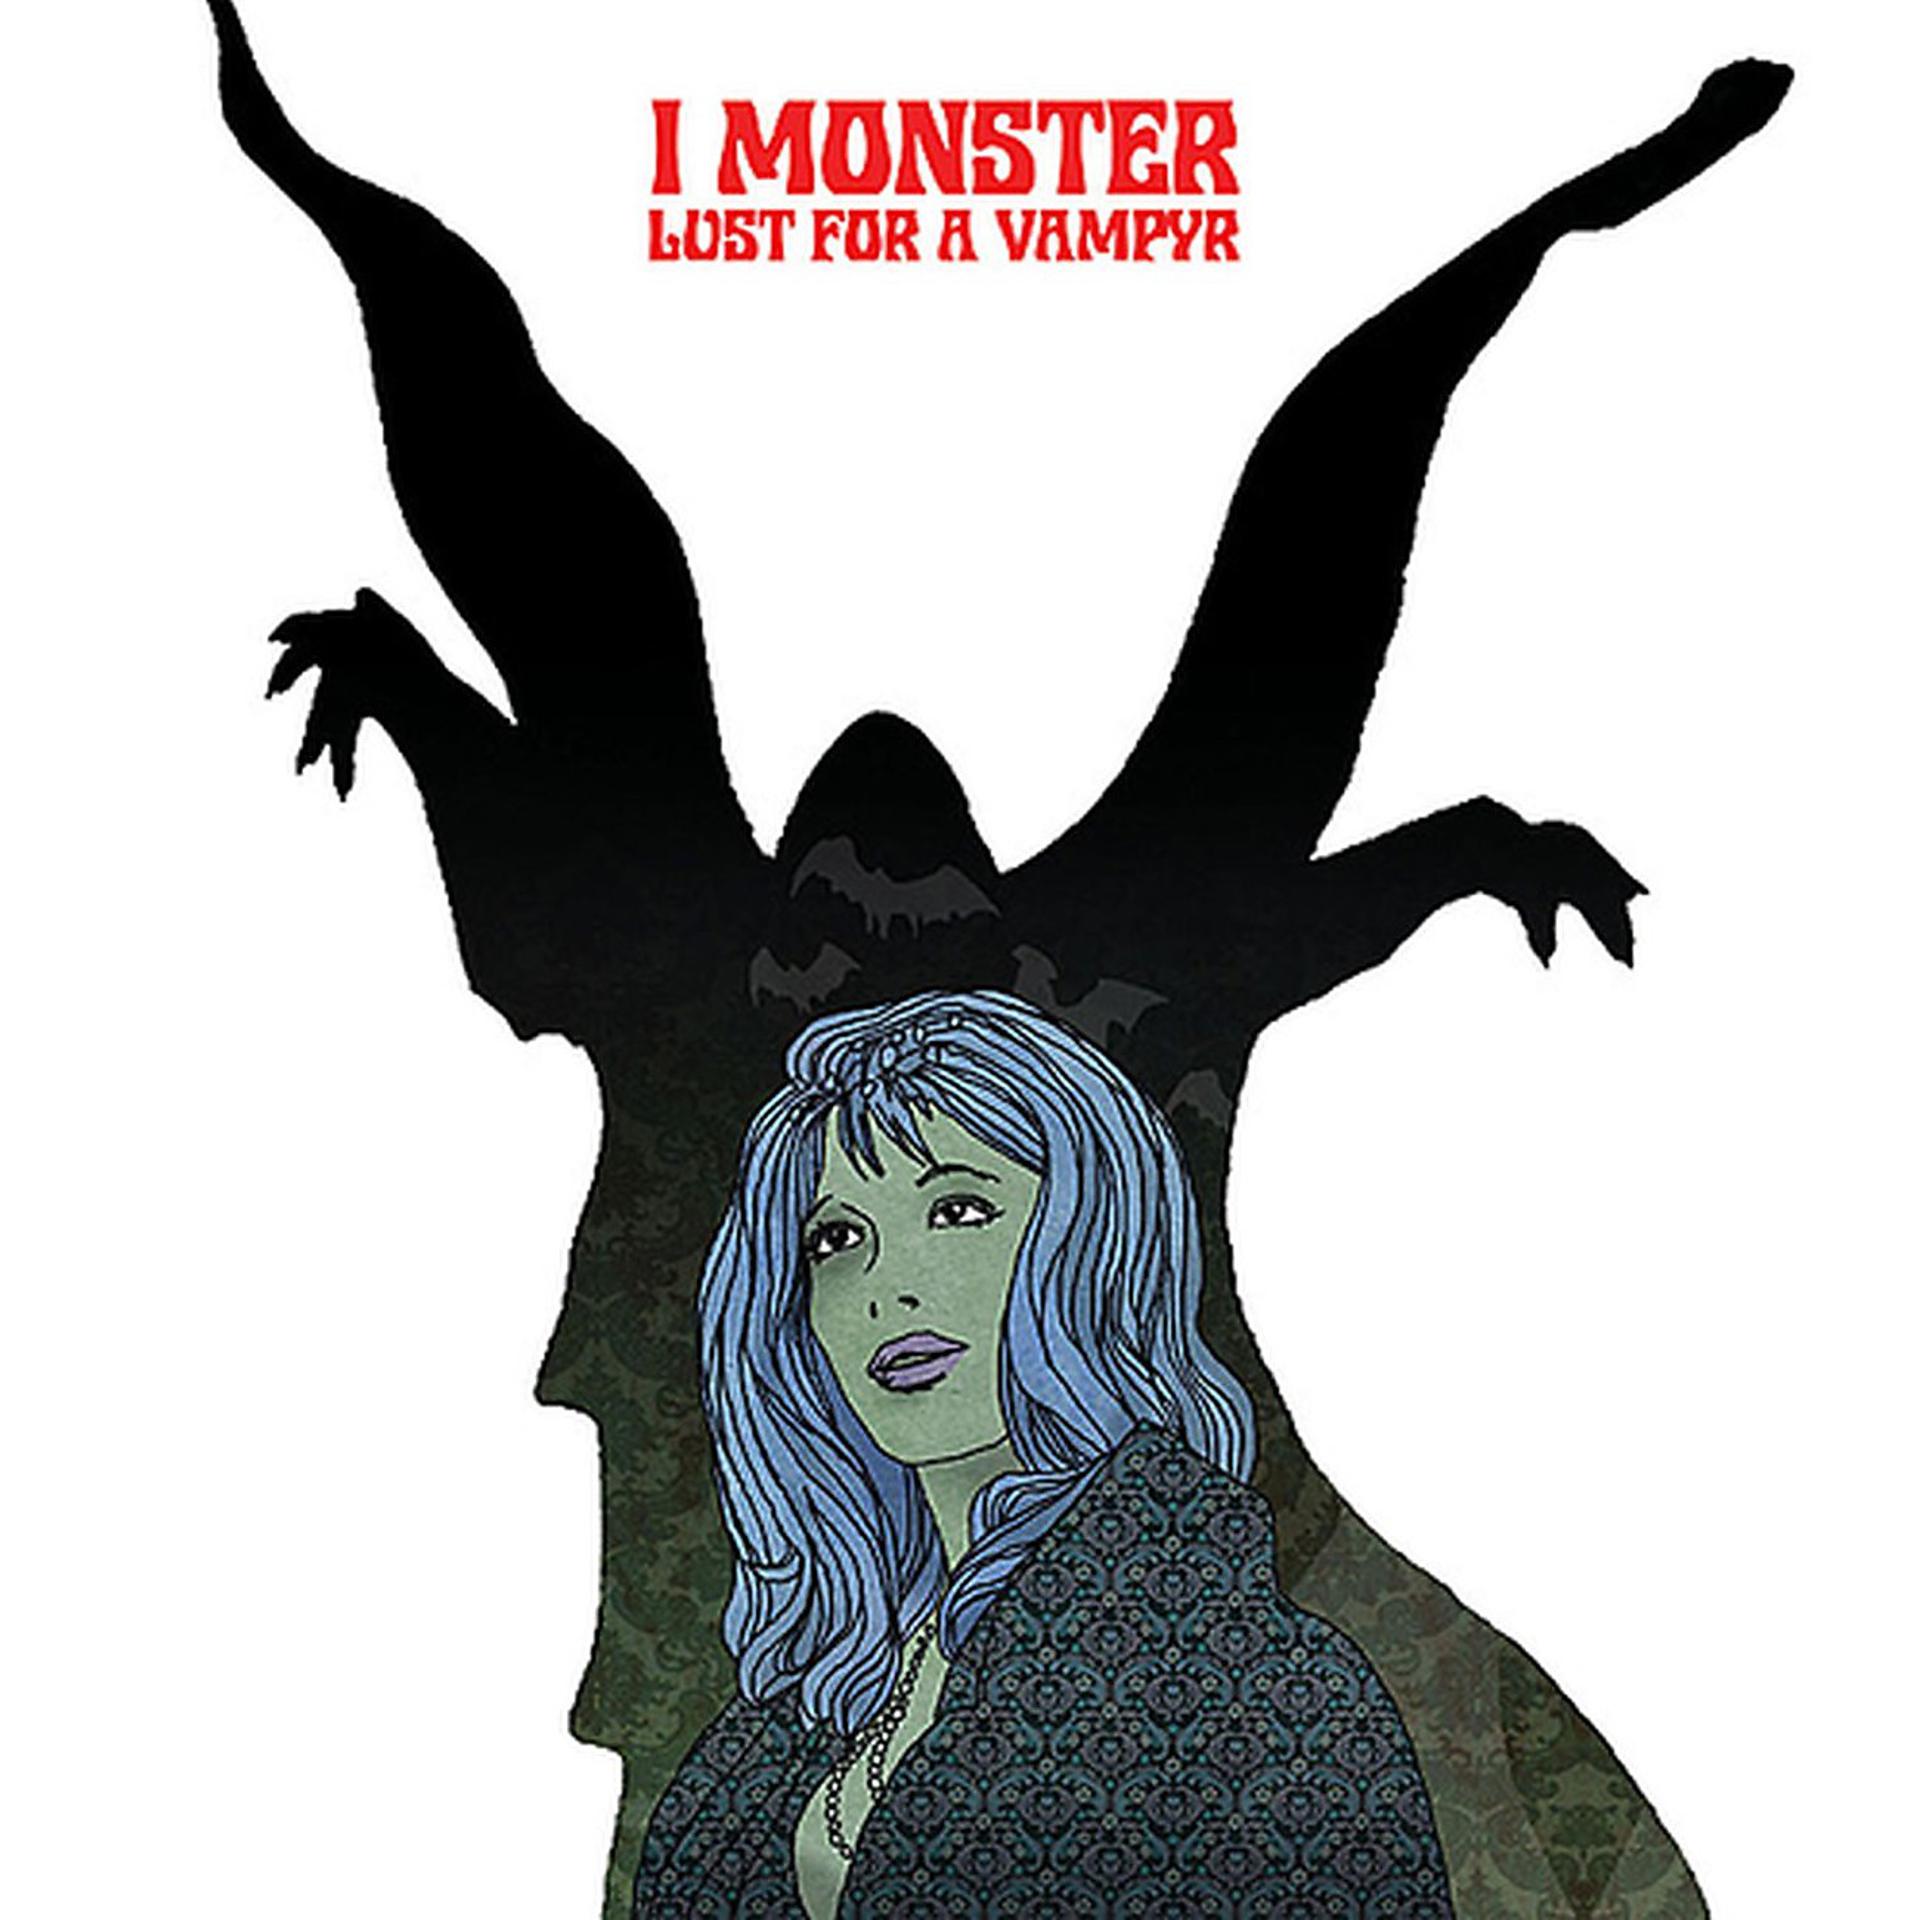 Чудища песни. I Monster группа. I Monster альбом. Группа i Monster альбомы. I Monster neveroddoreven.